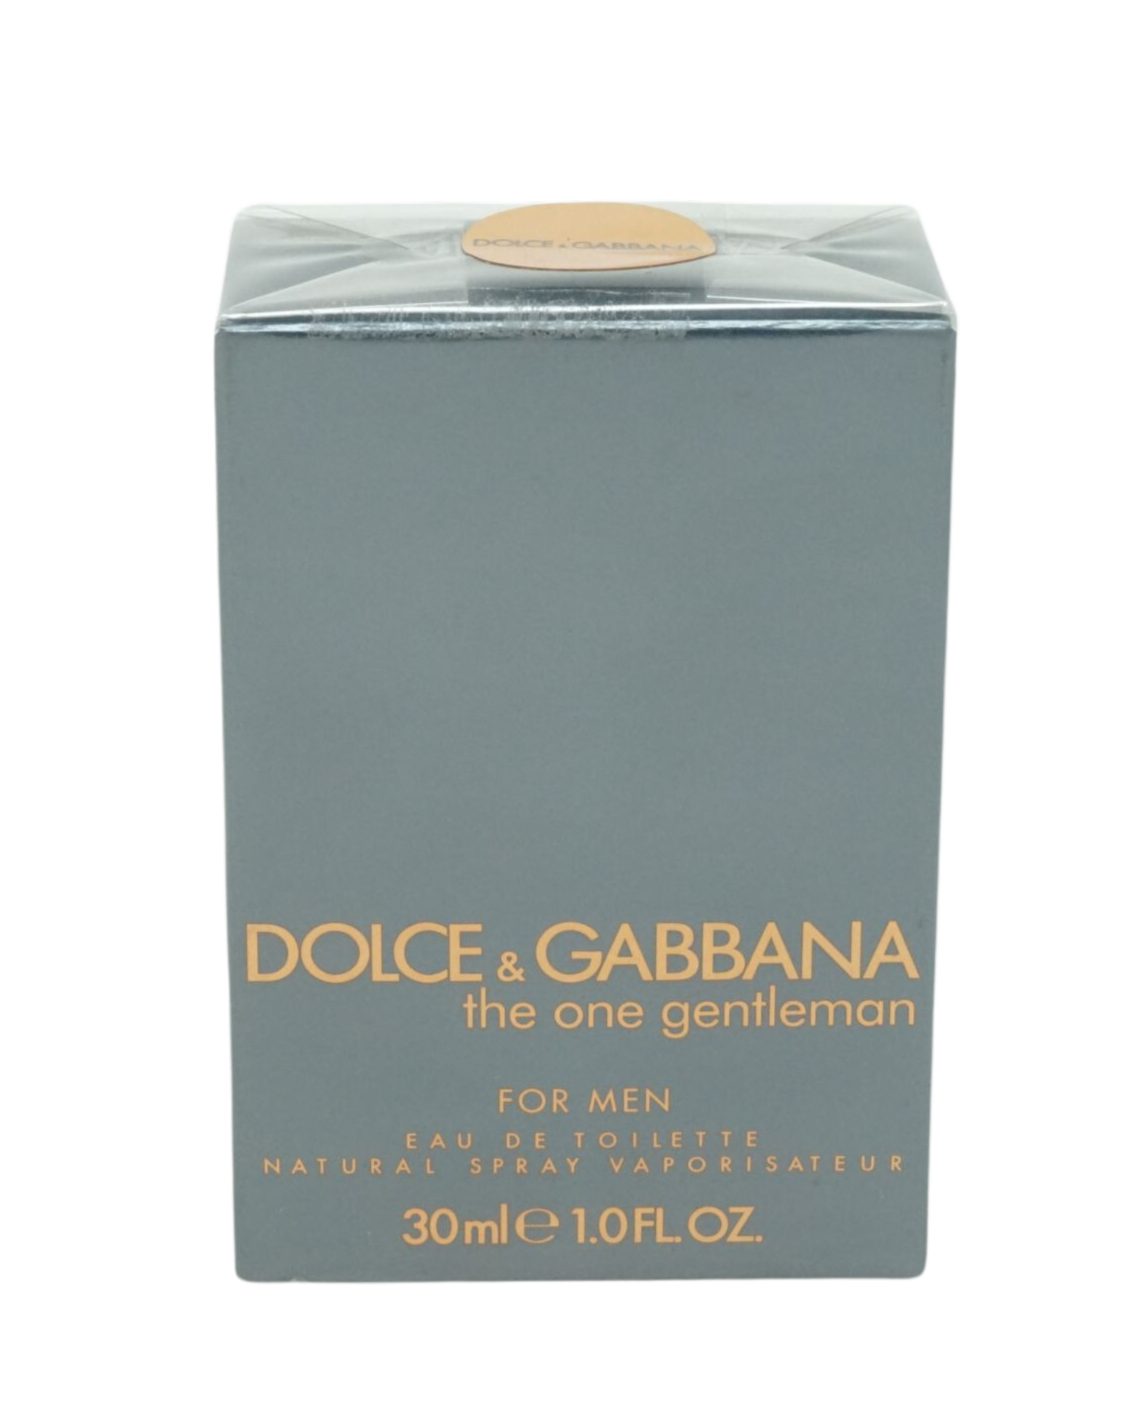 & Toilette & DOLCE The Eau de Gentleman 30ml Eau One Gabbana Dolce Parfum de GABBANA